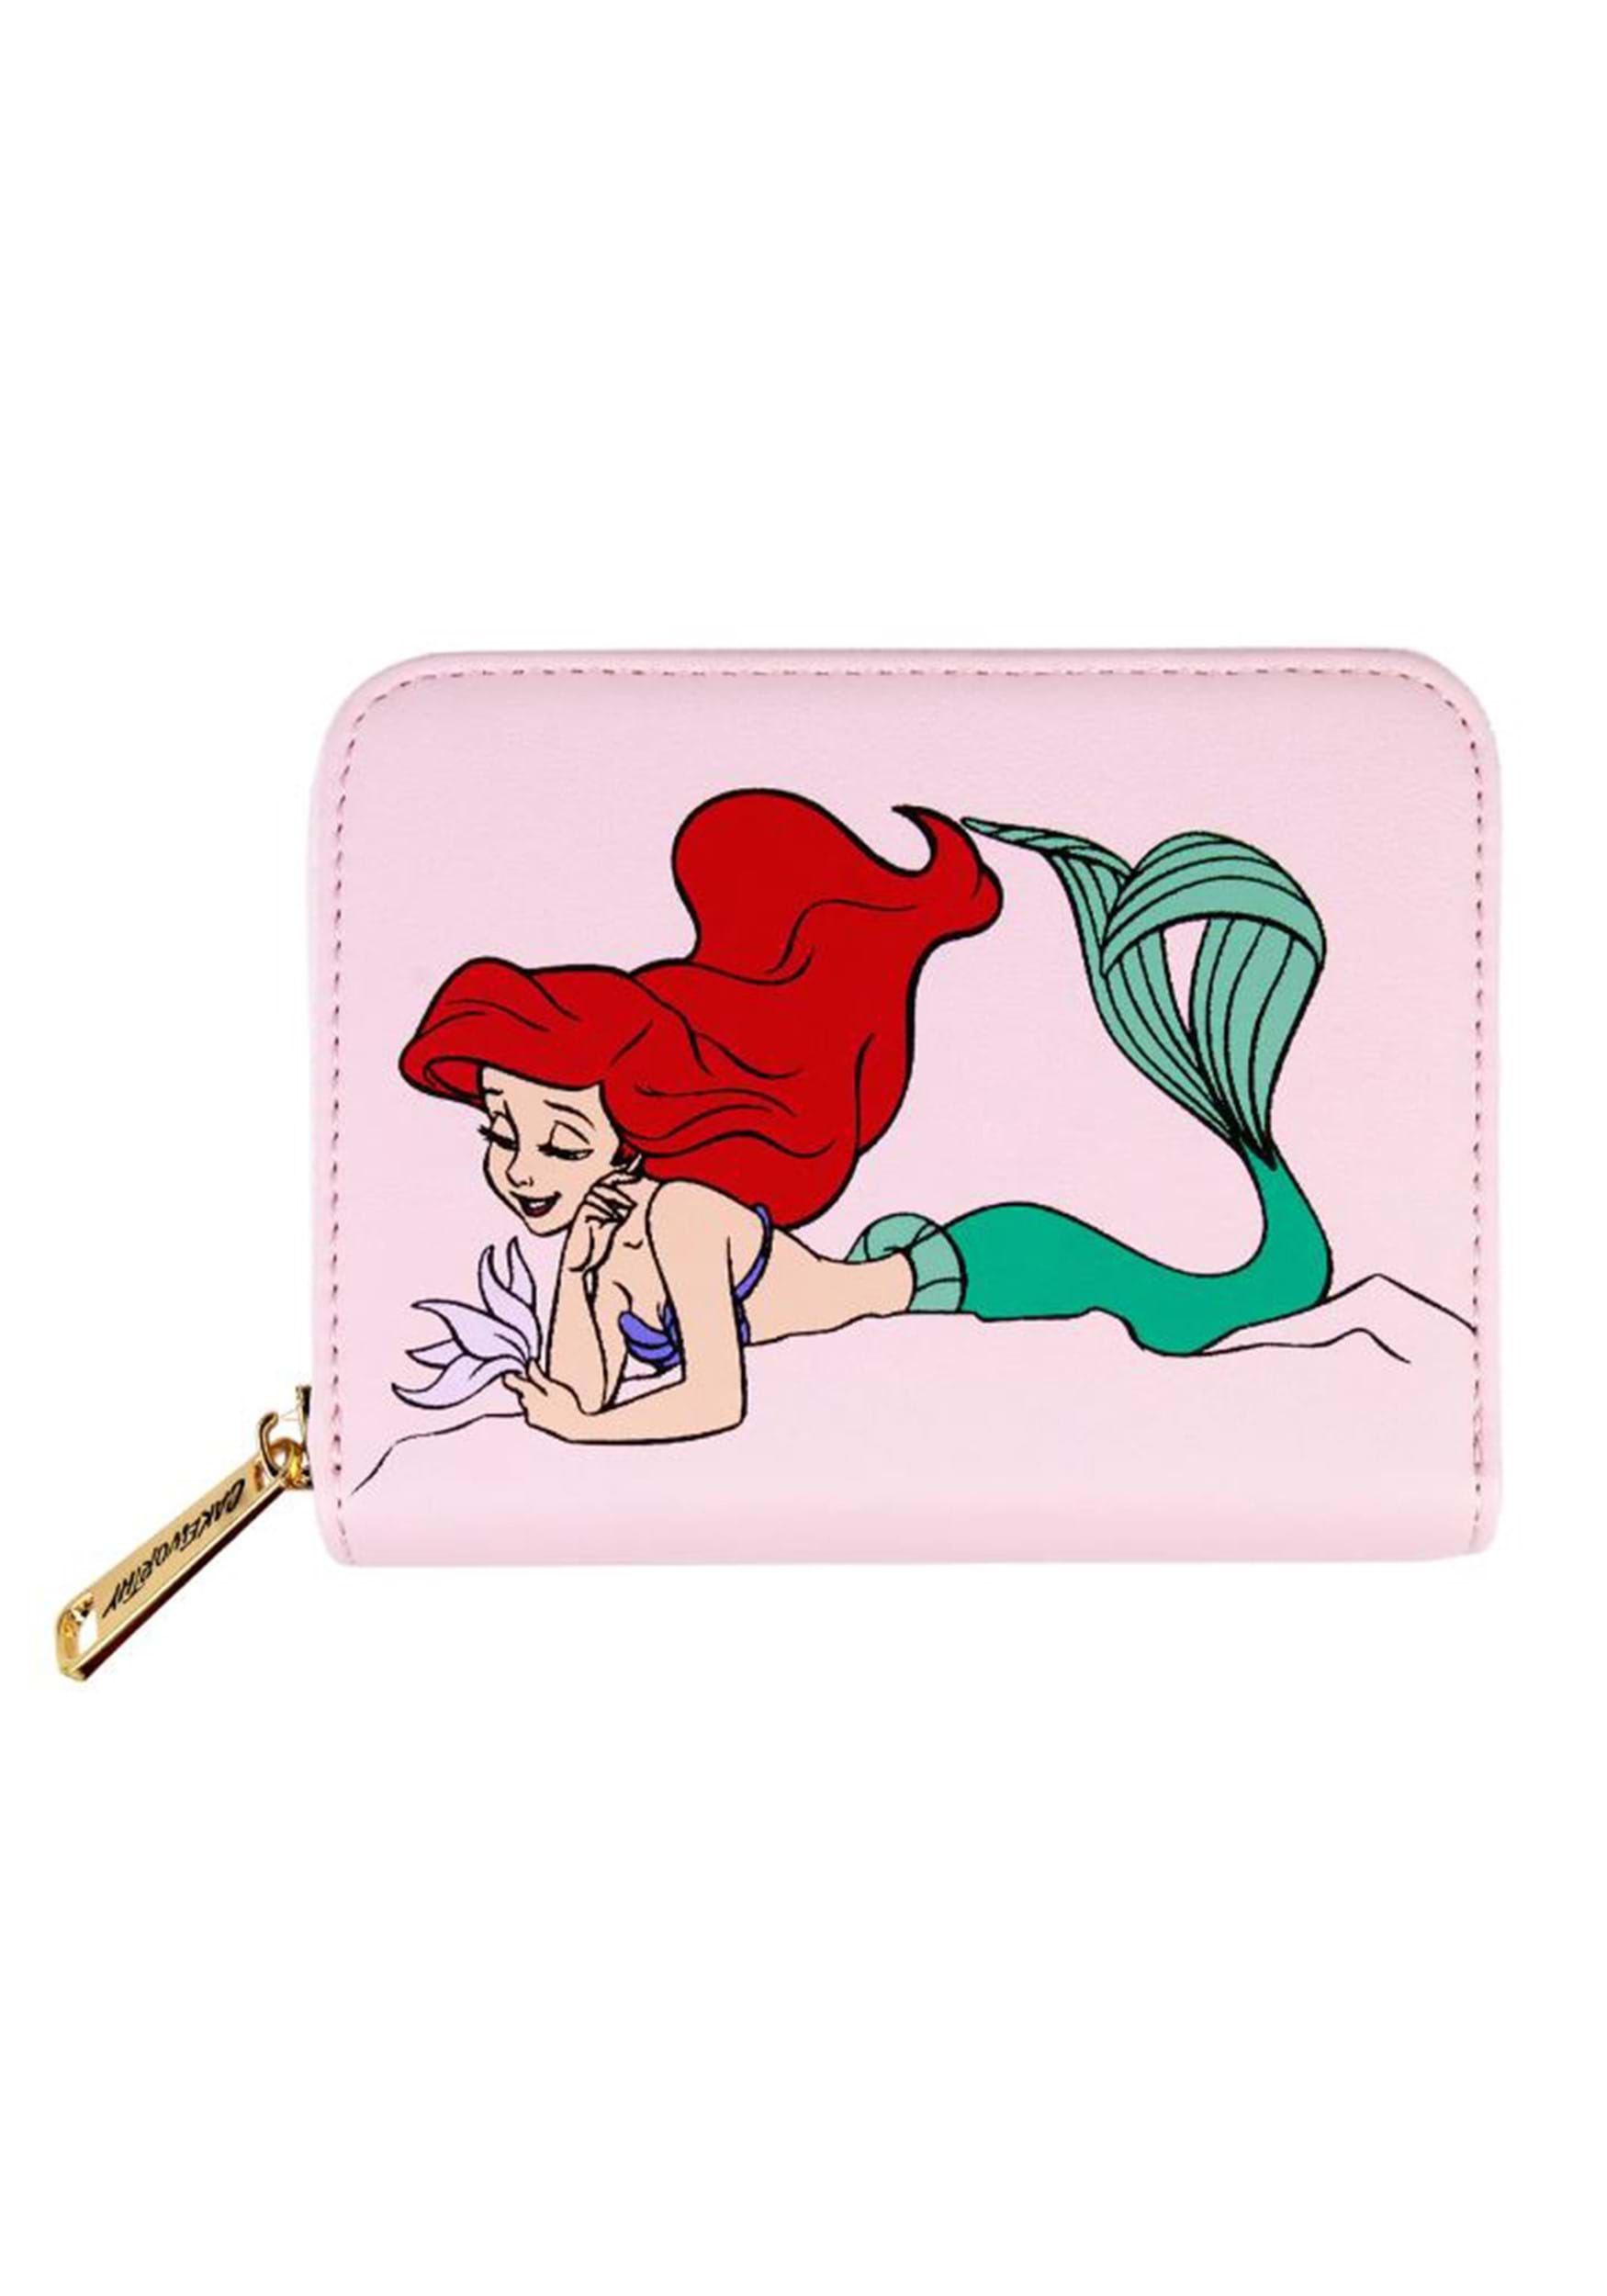 The Little Mermaid Heart Wallet by Cakeworthy